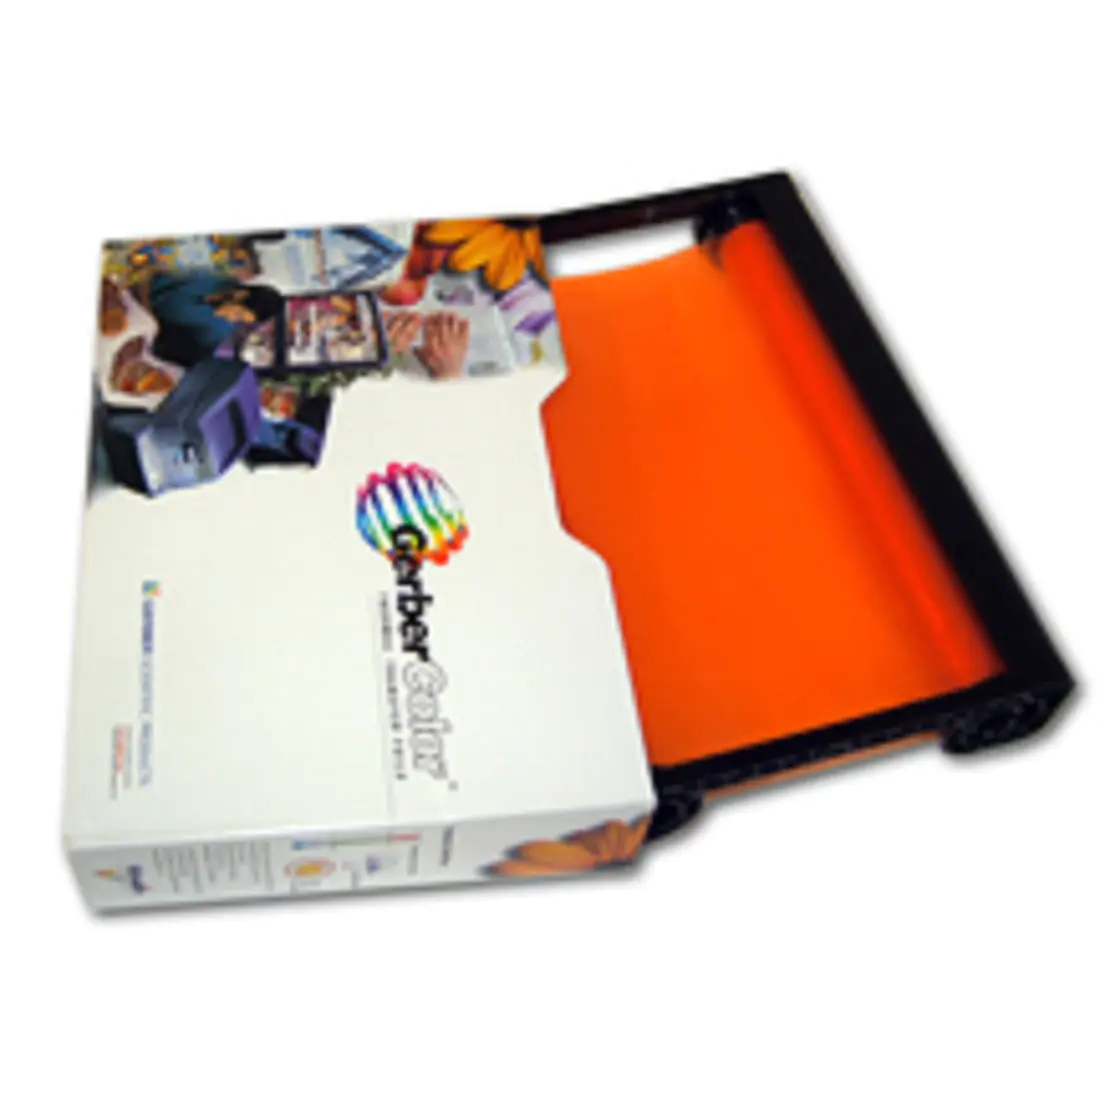 An orange GCT Transparent Foil in a white box with a GerberColor logo.